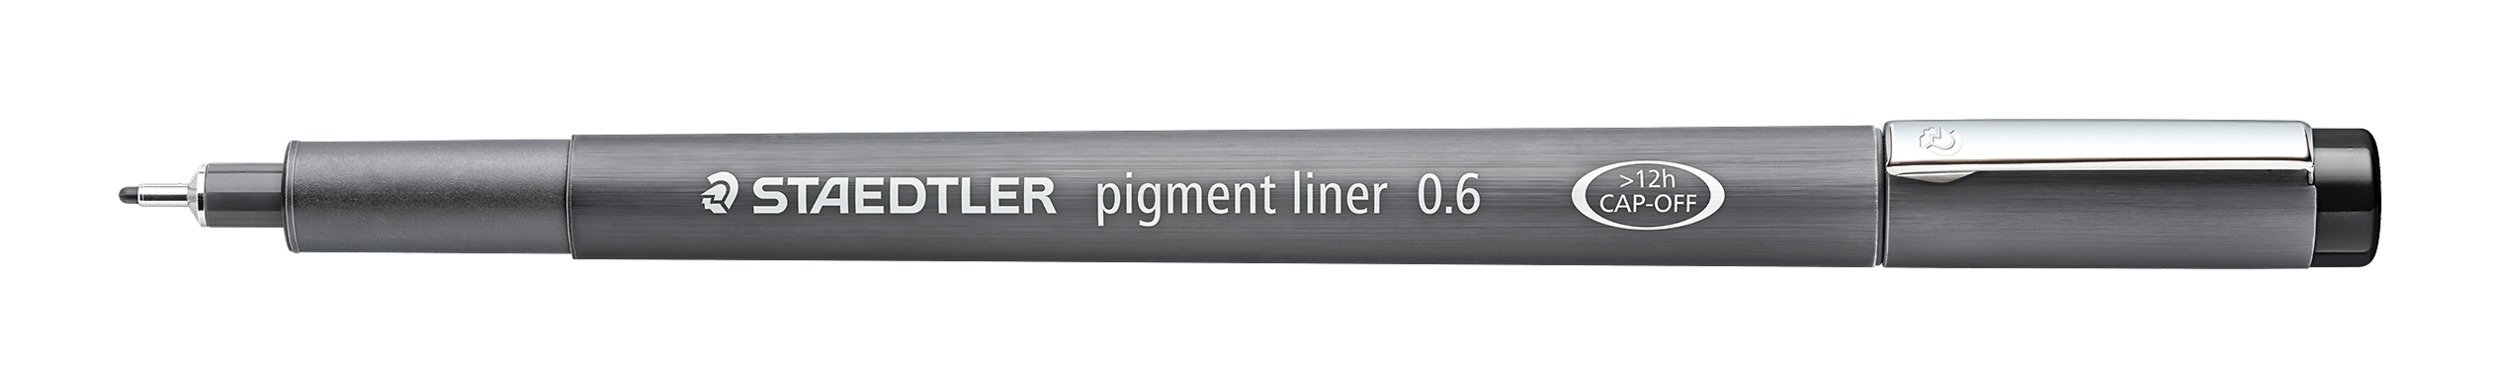 Pigment liner 0.6mm